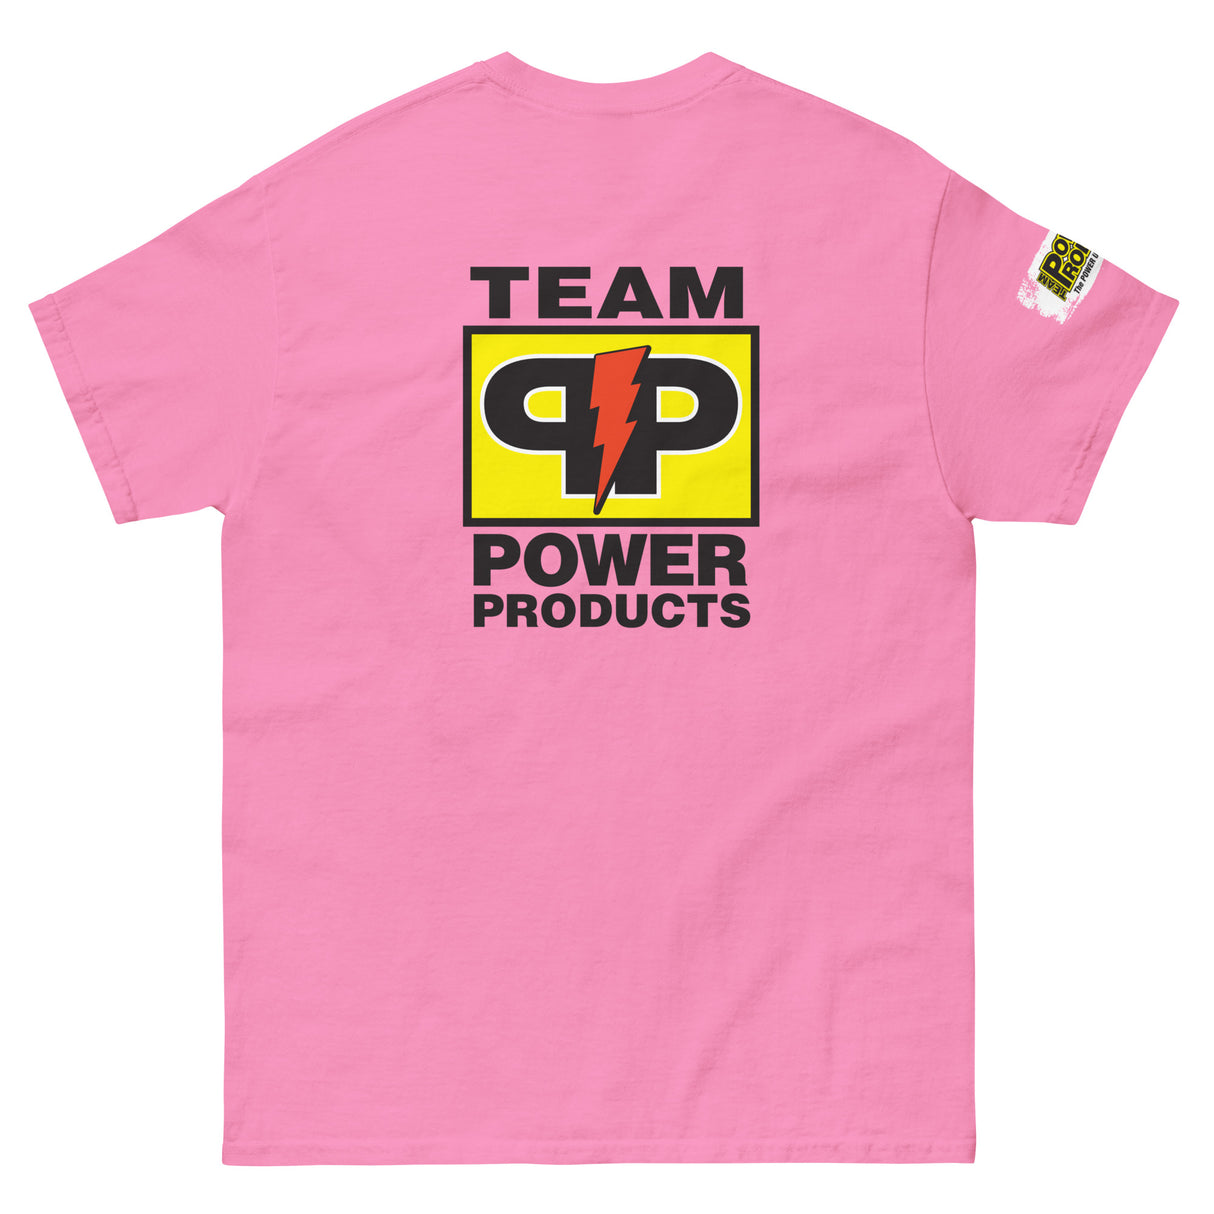 TPP Alternate TEAM Tee Shirt!